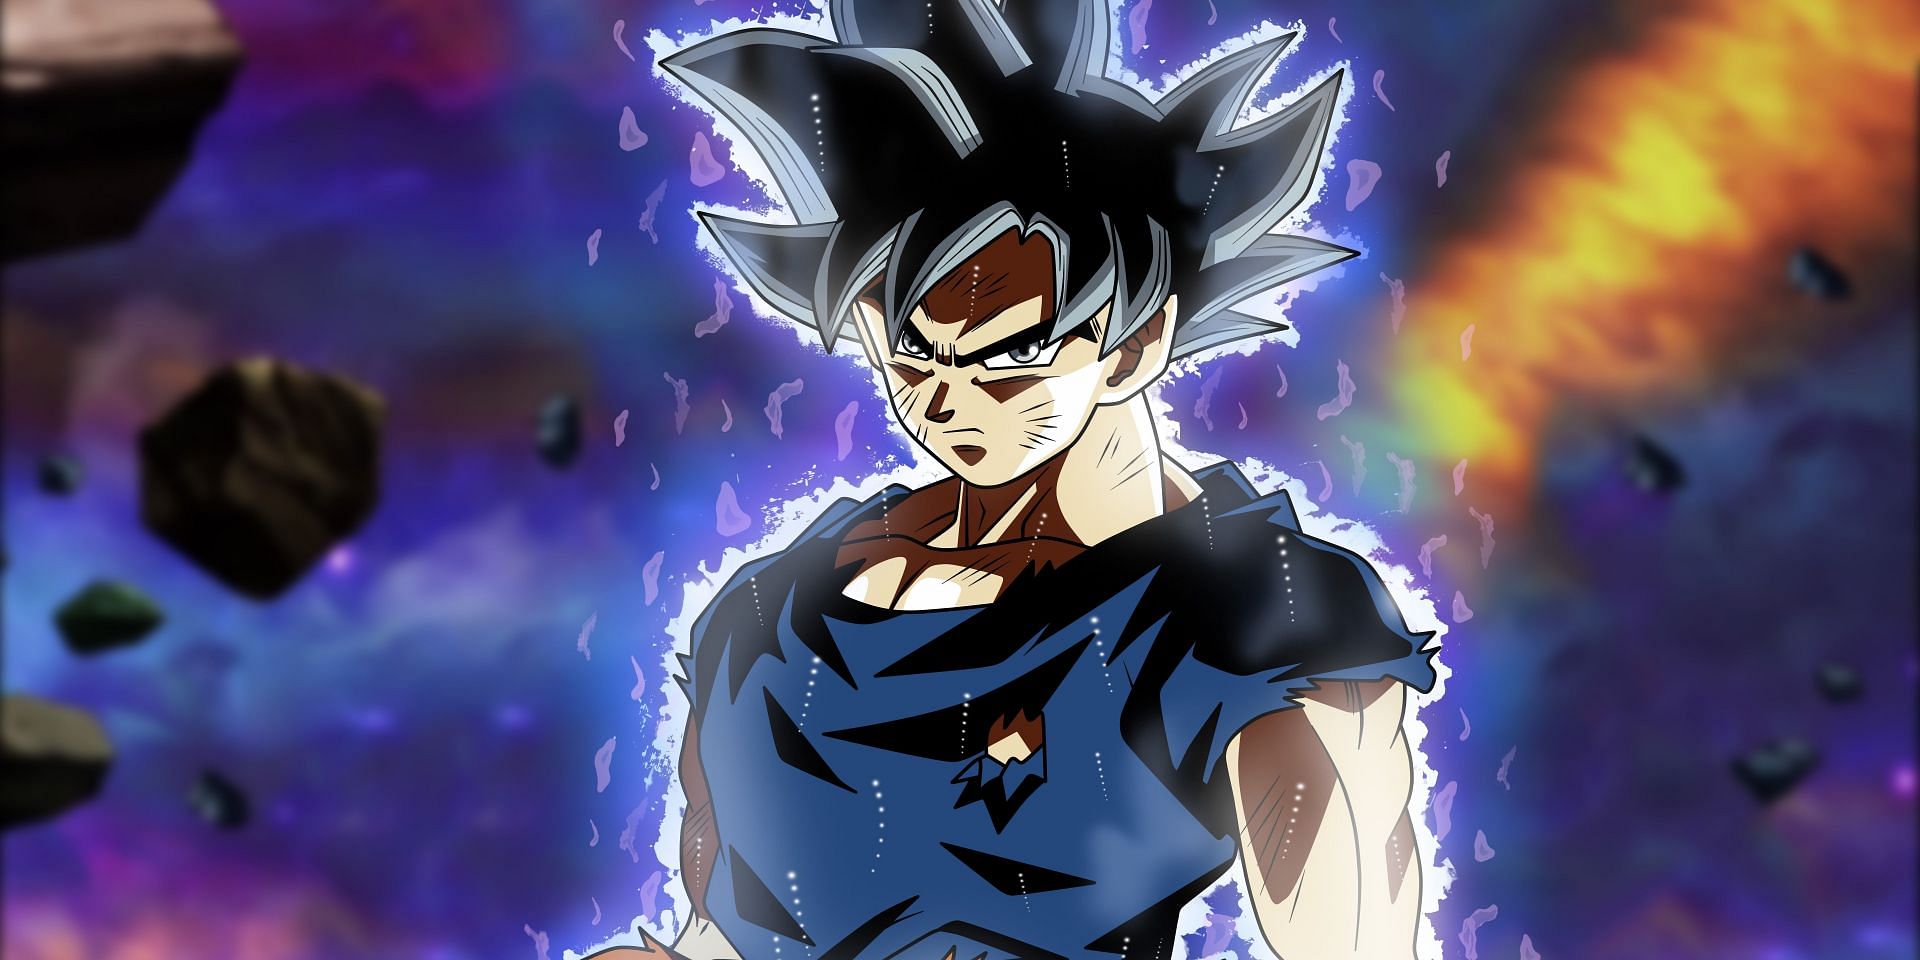 Goku using Ultra Instinct Sign (Image via Toei Animation)